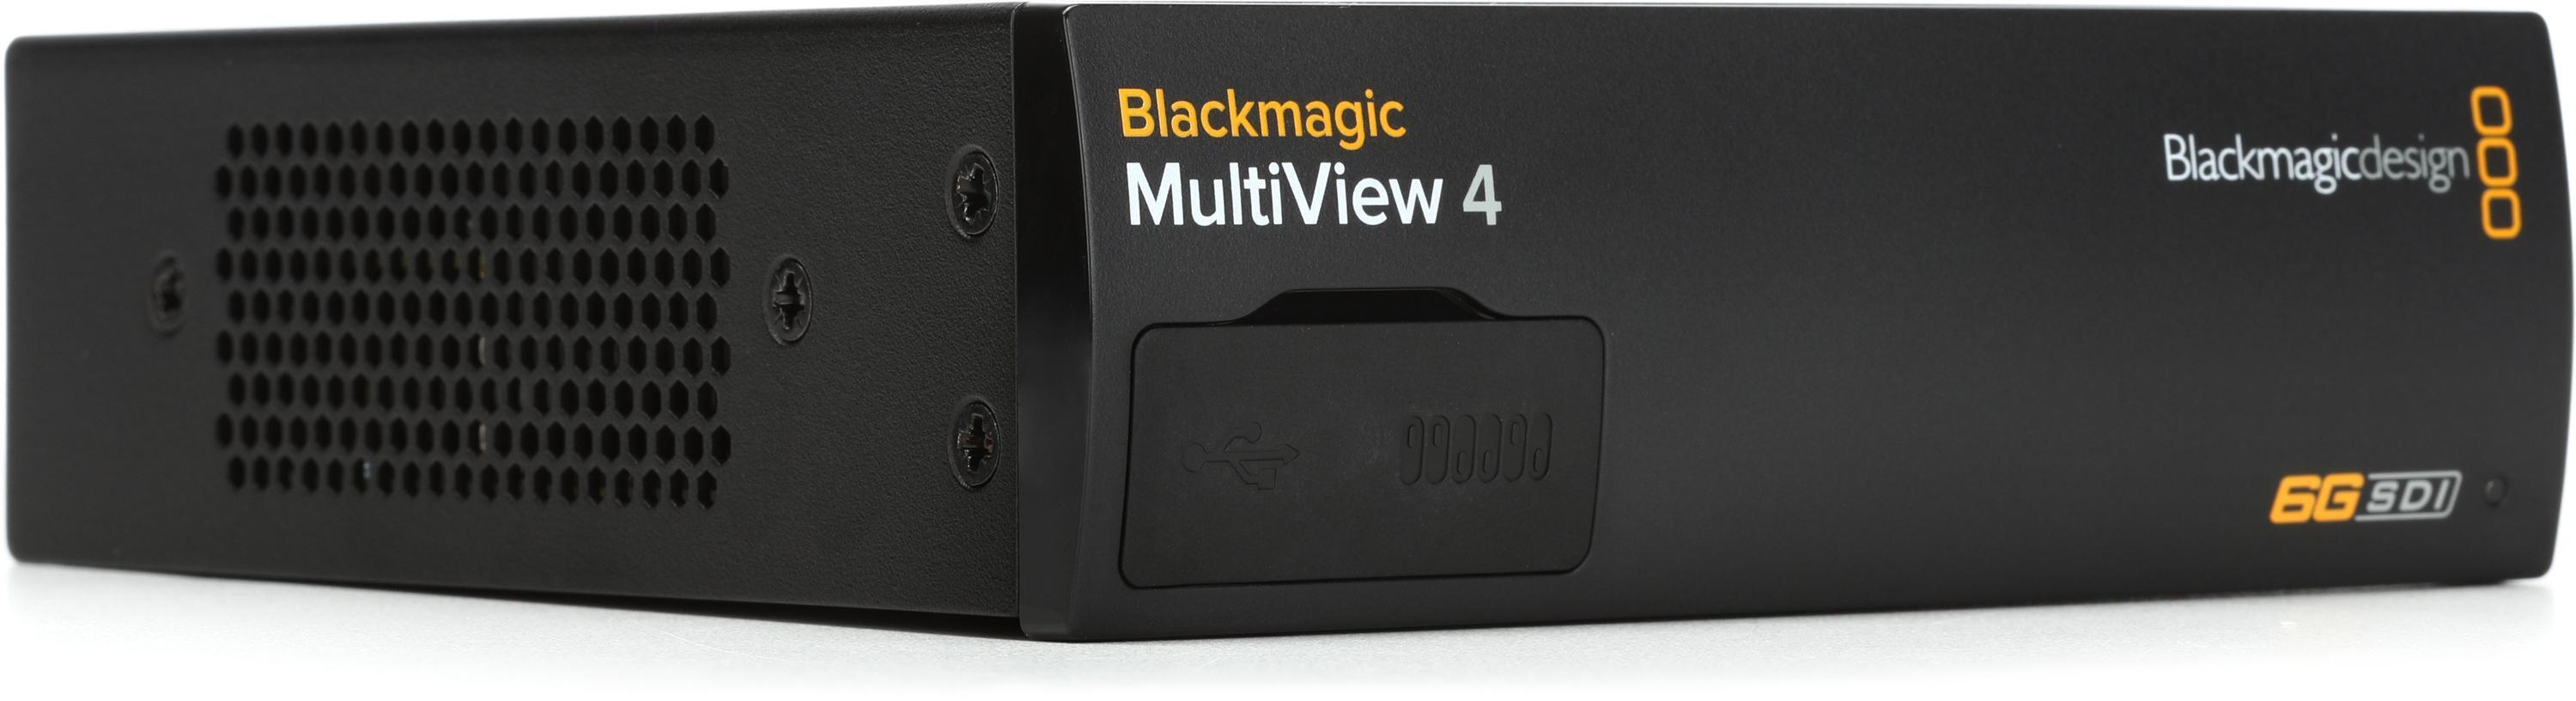 Blackmagic Design MultiView 4 Monitoring Box